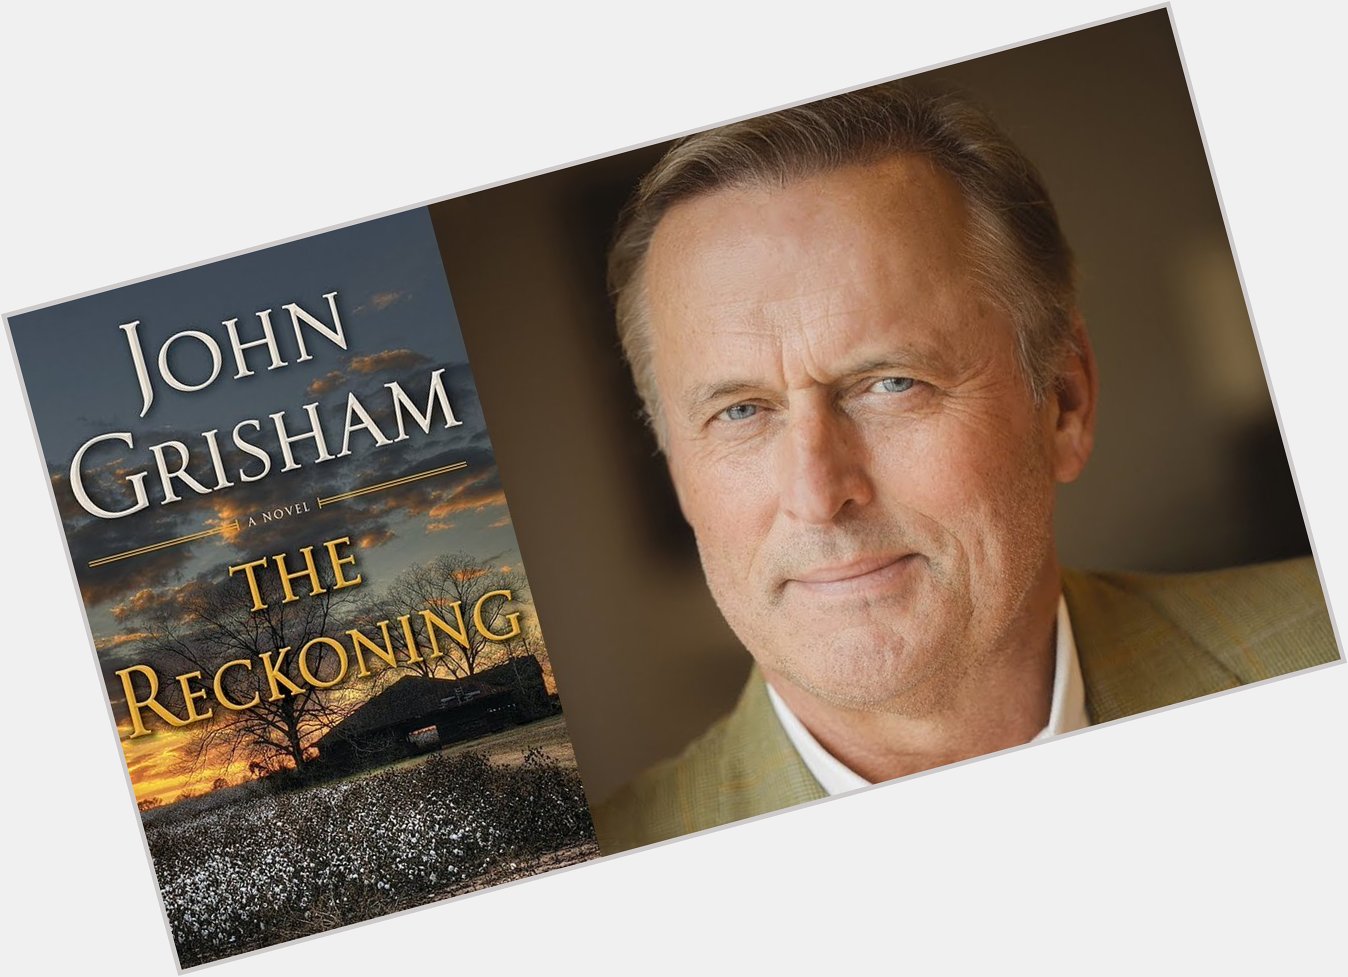 Happy Birthday John Grisham! His latest book the Reckoning looks so good!  